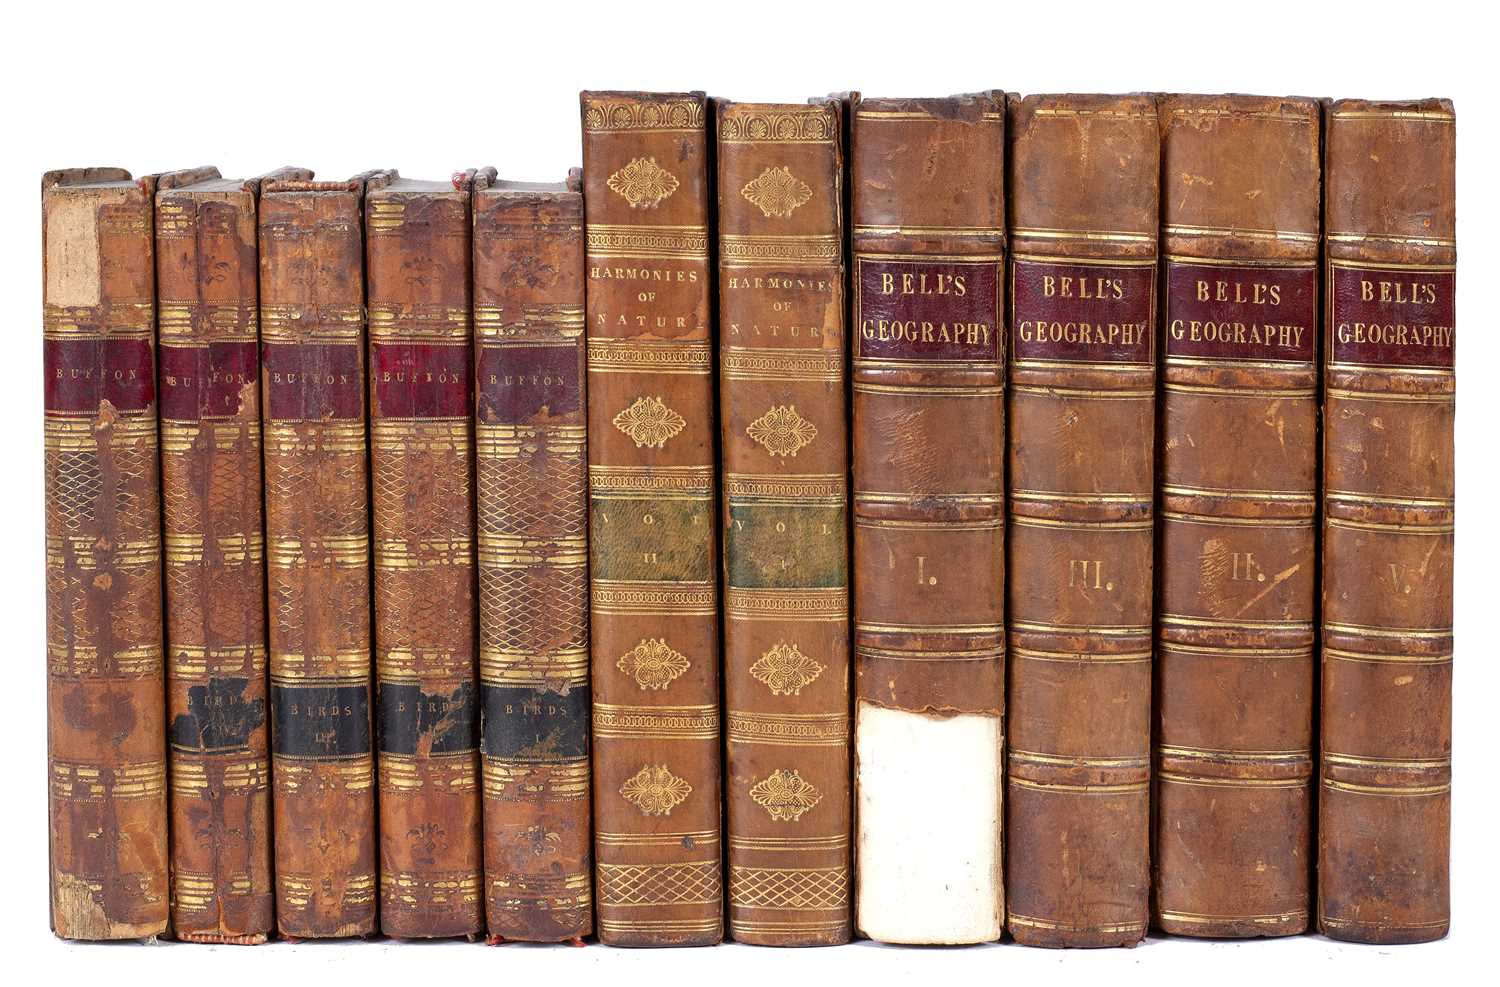 Buffon. Natural History of Birds, Fish, Insects and Reptiles. 5 vols. London 1798. 8vo. Full calf